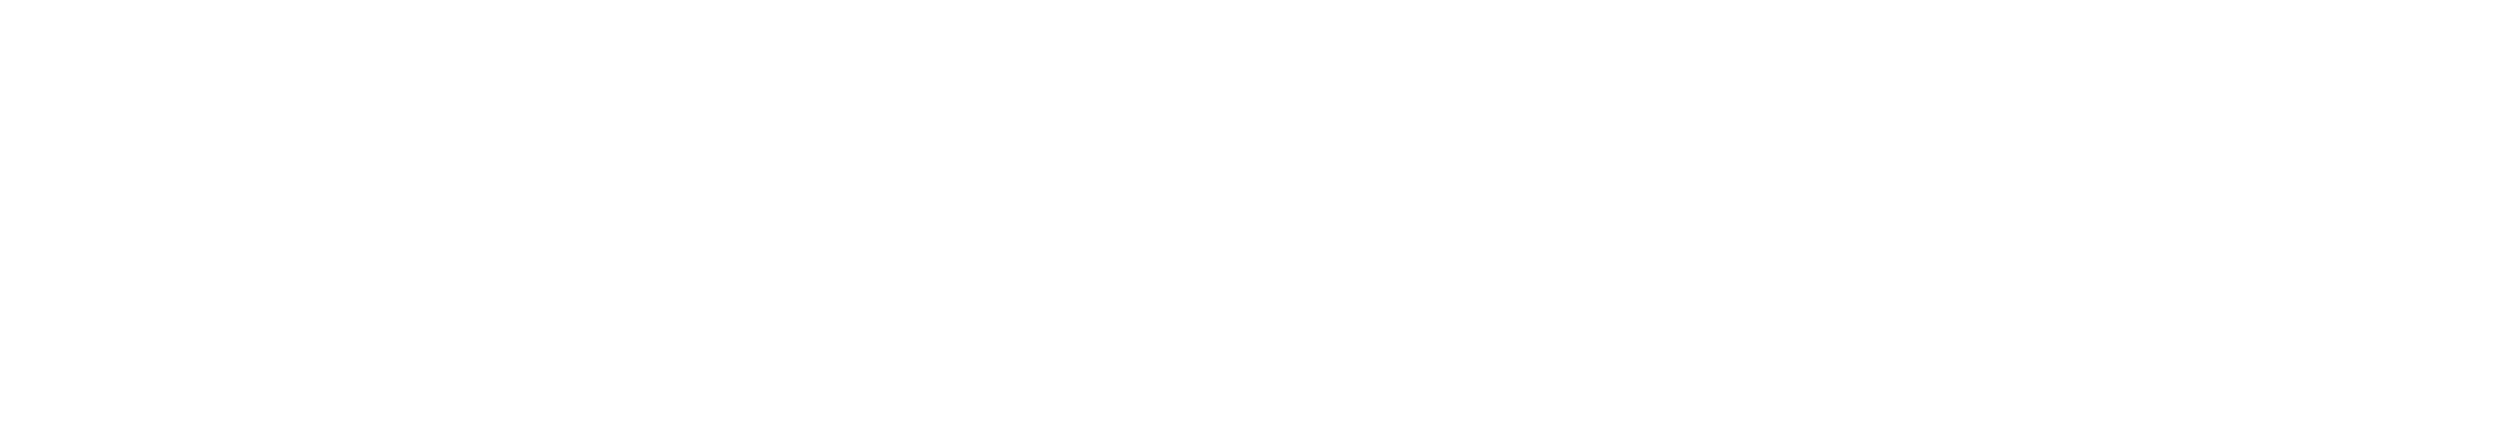 coerver logo white on transparent.png